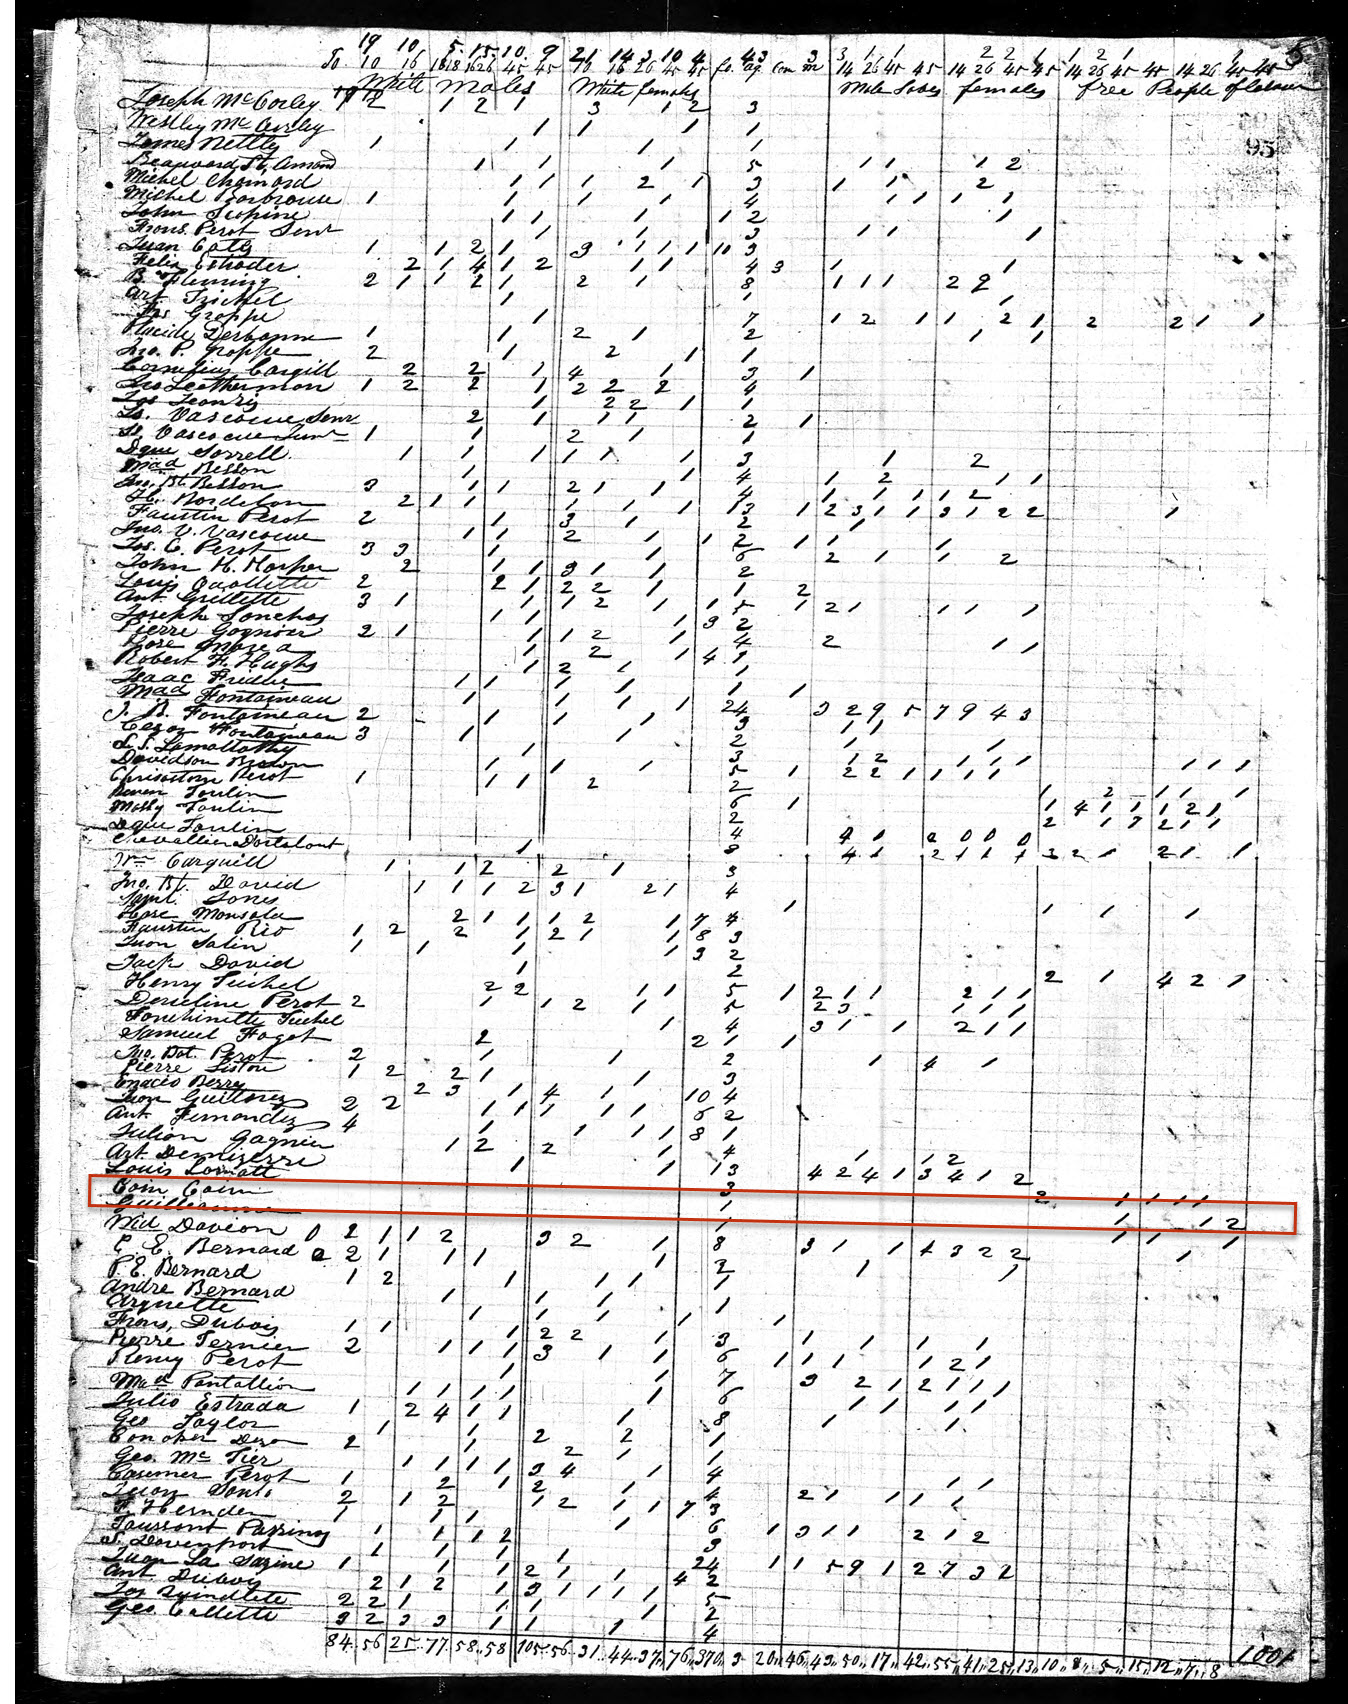 1820 census, Natchitoches Parish, Louisiana